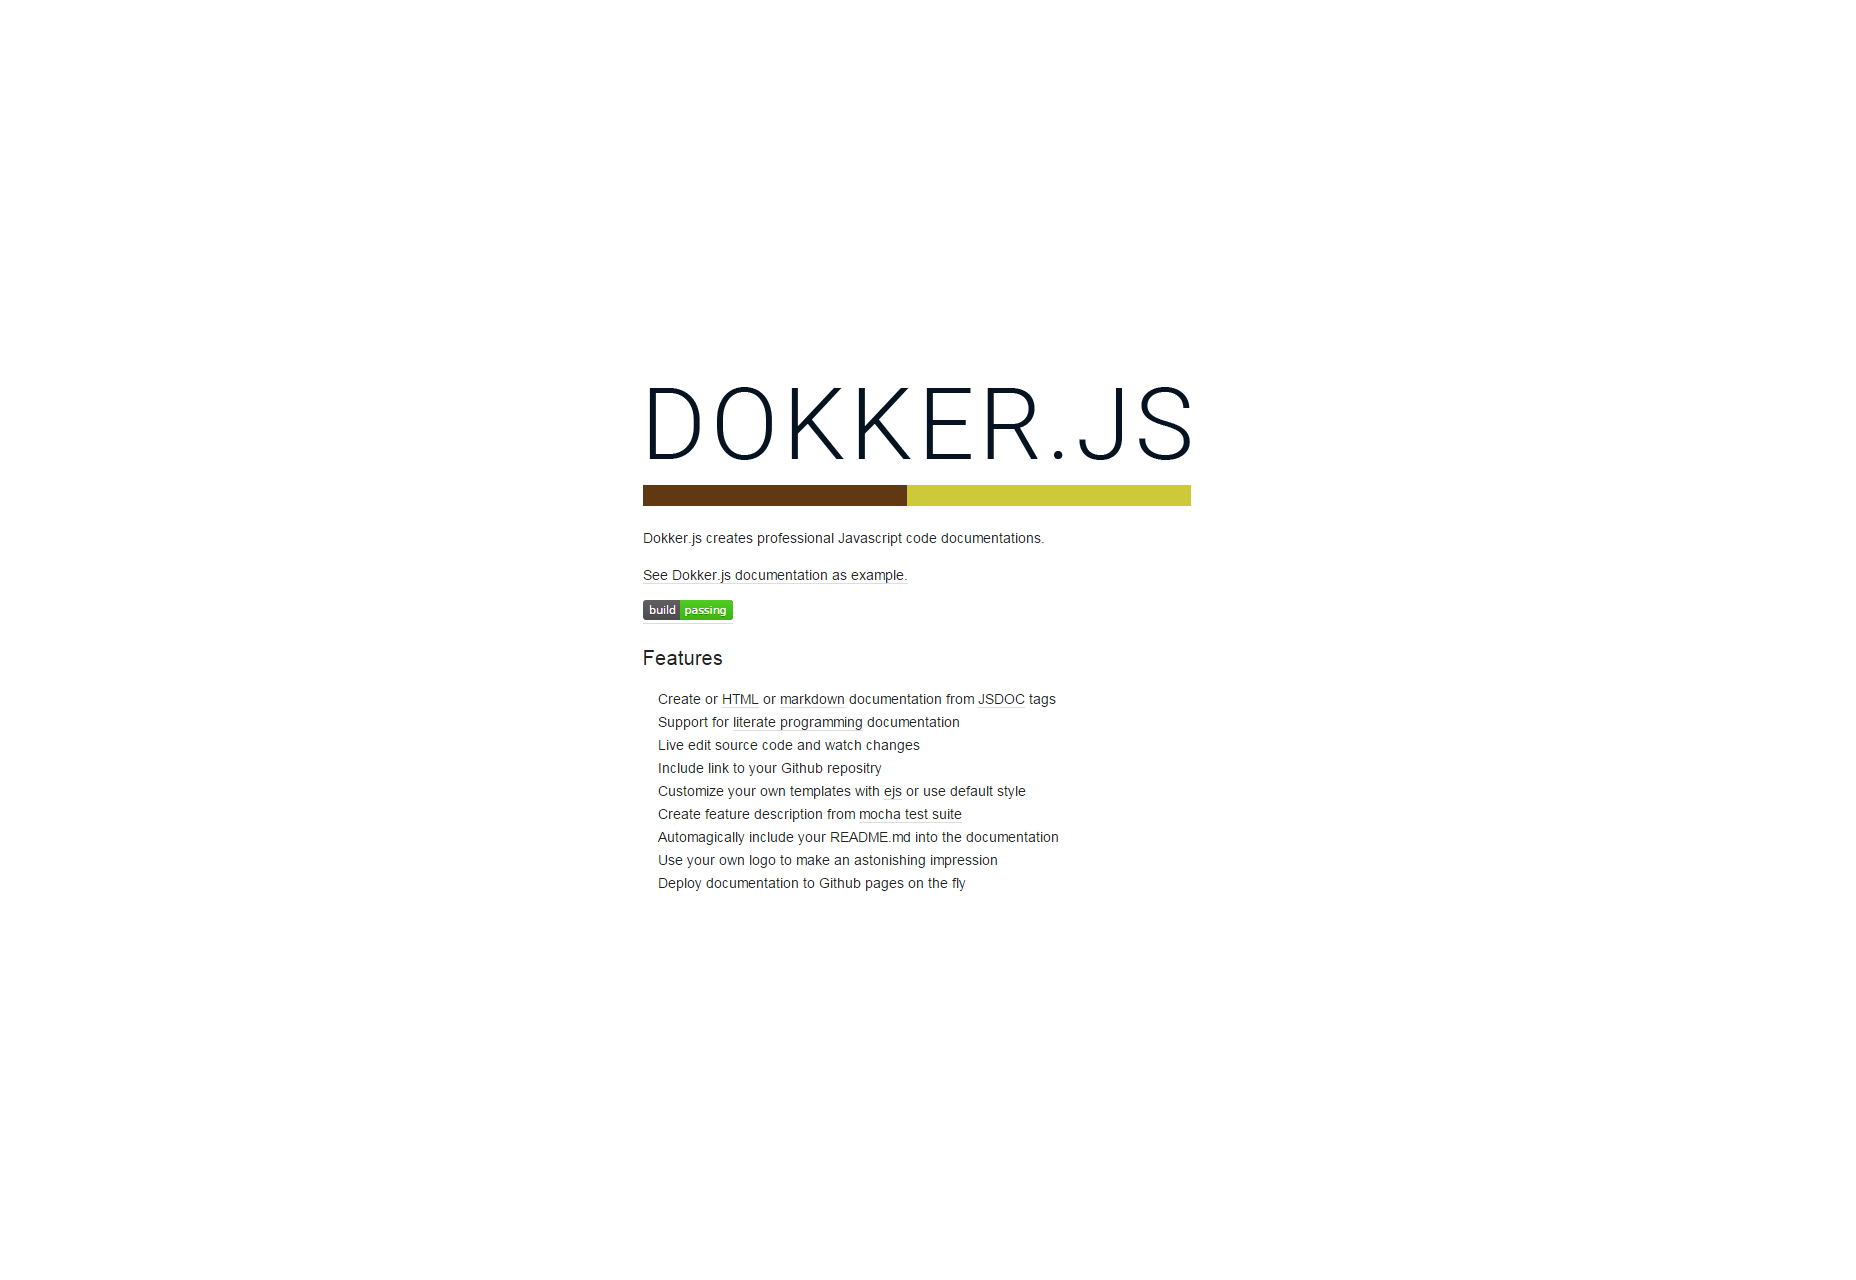 Dokker.js: Professional Javascript Code Document Creator